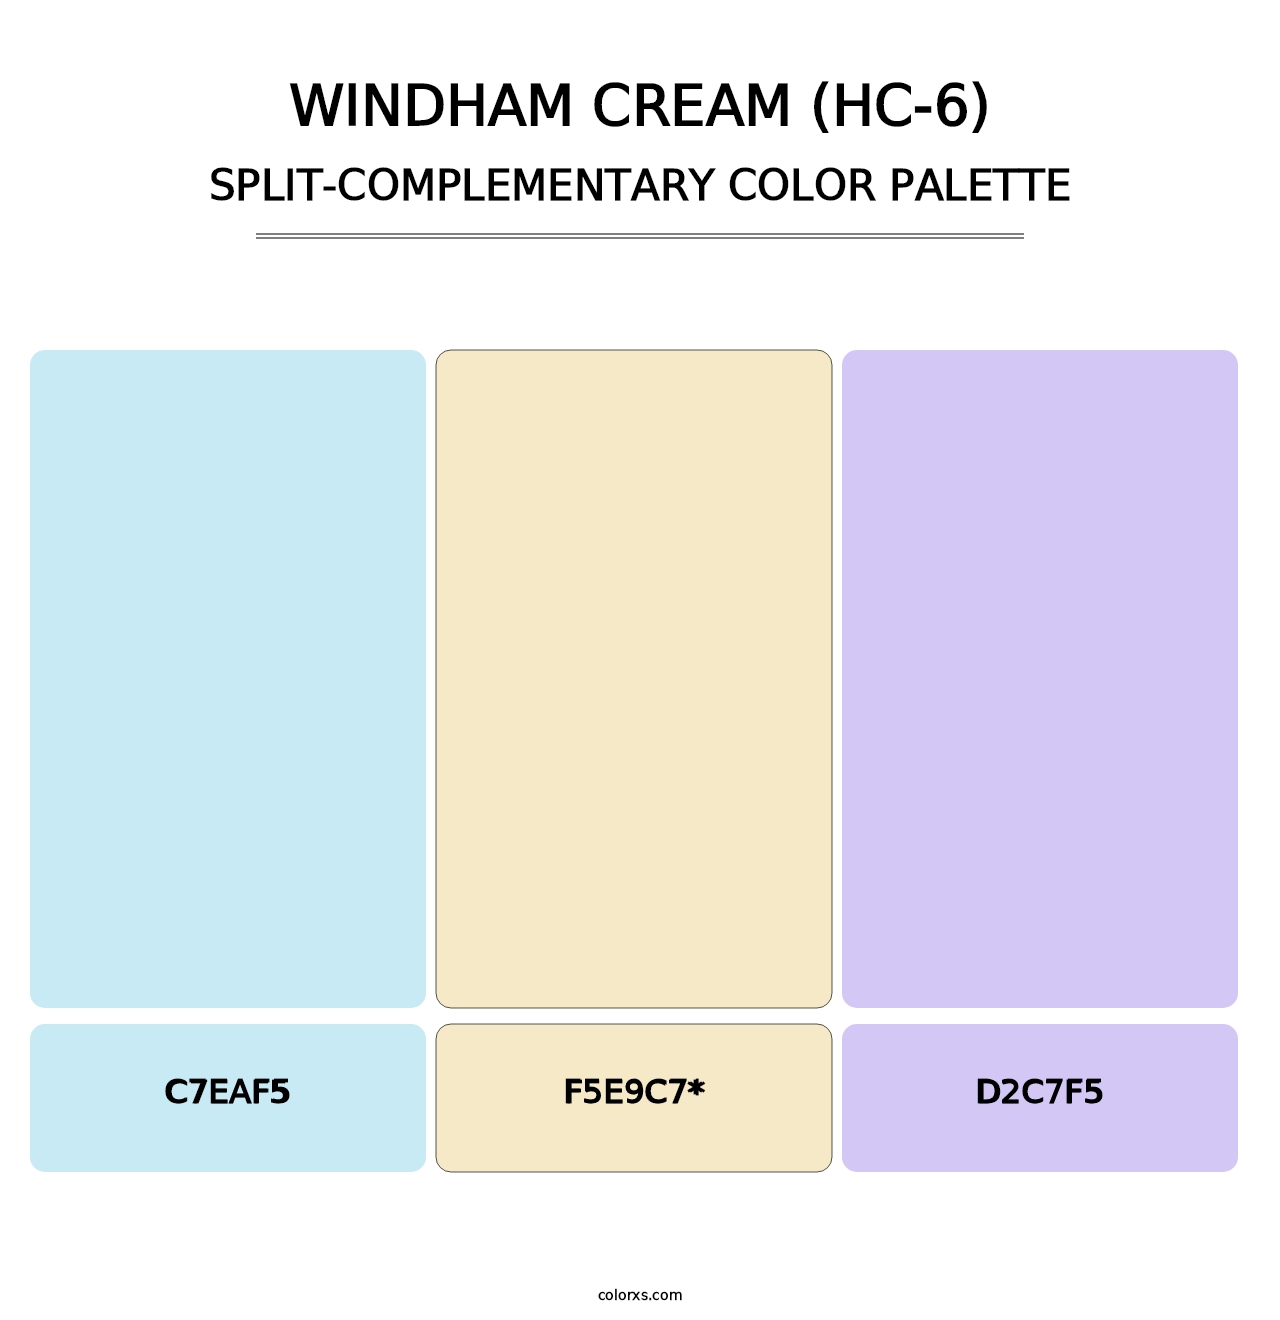 Windham Cream (HC-6) - Split-Complementary Color Palette